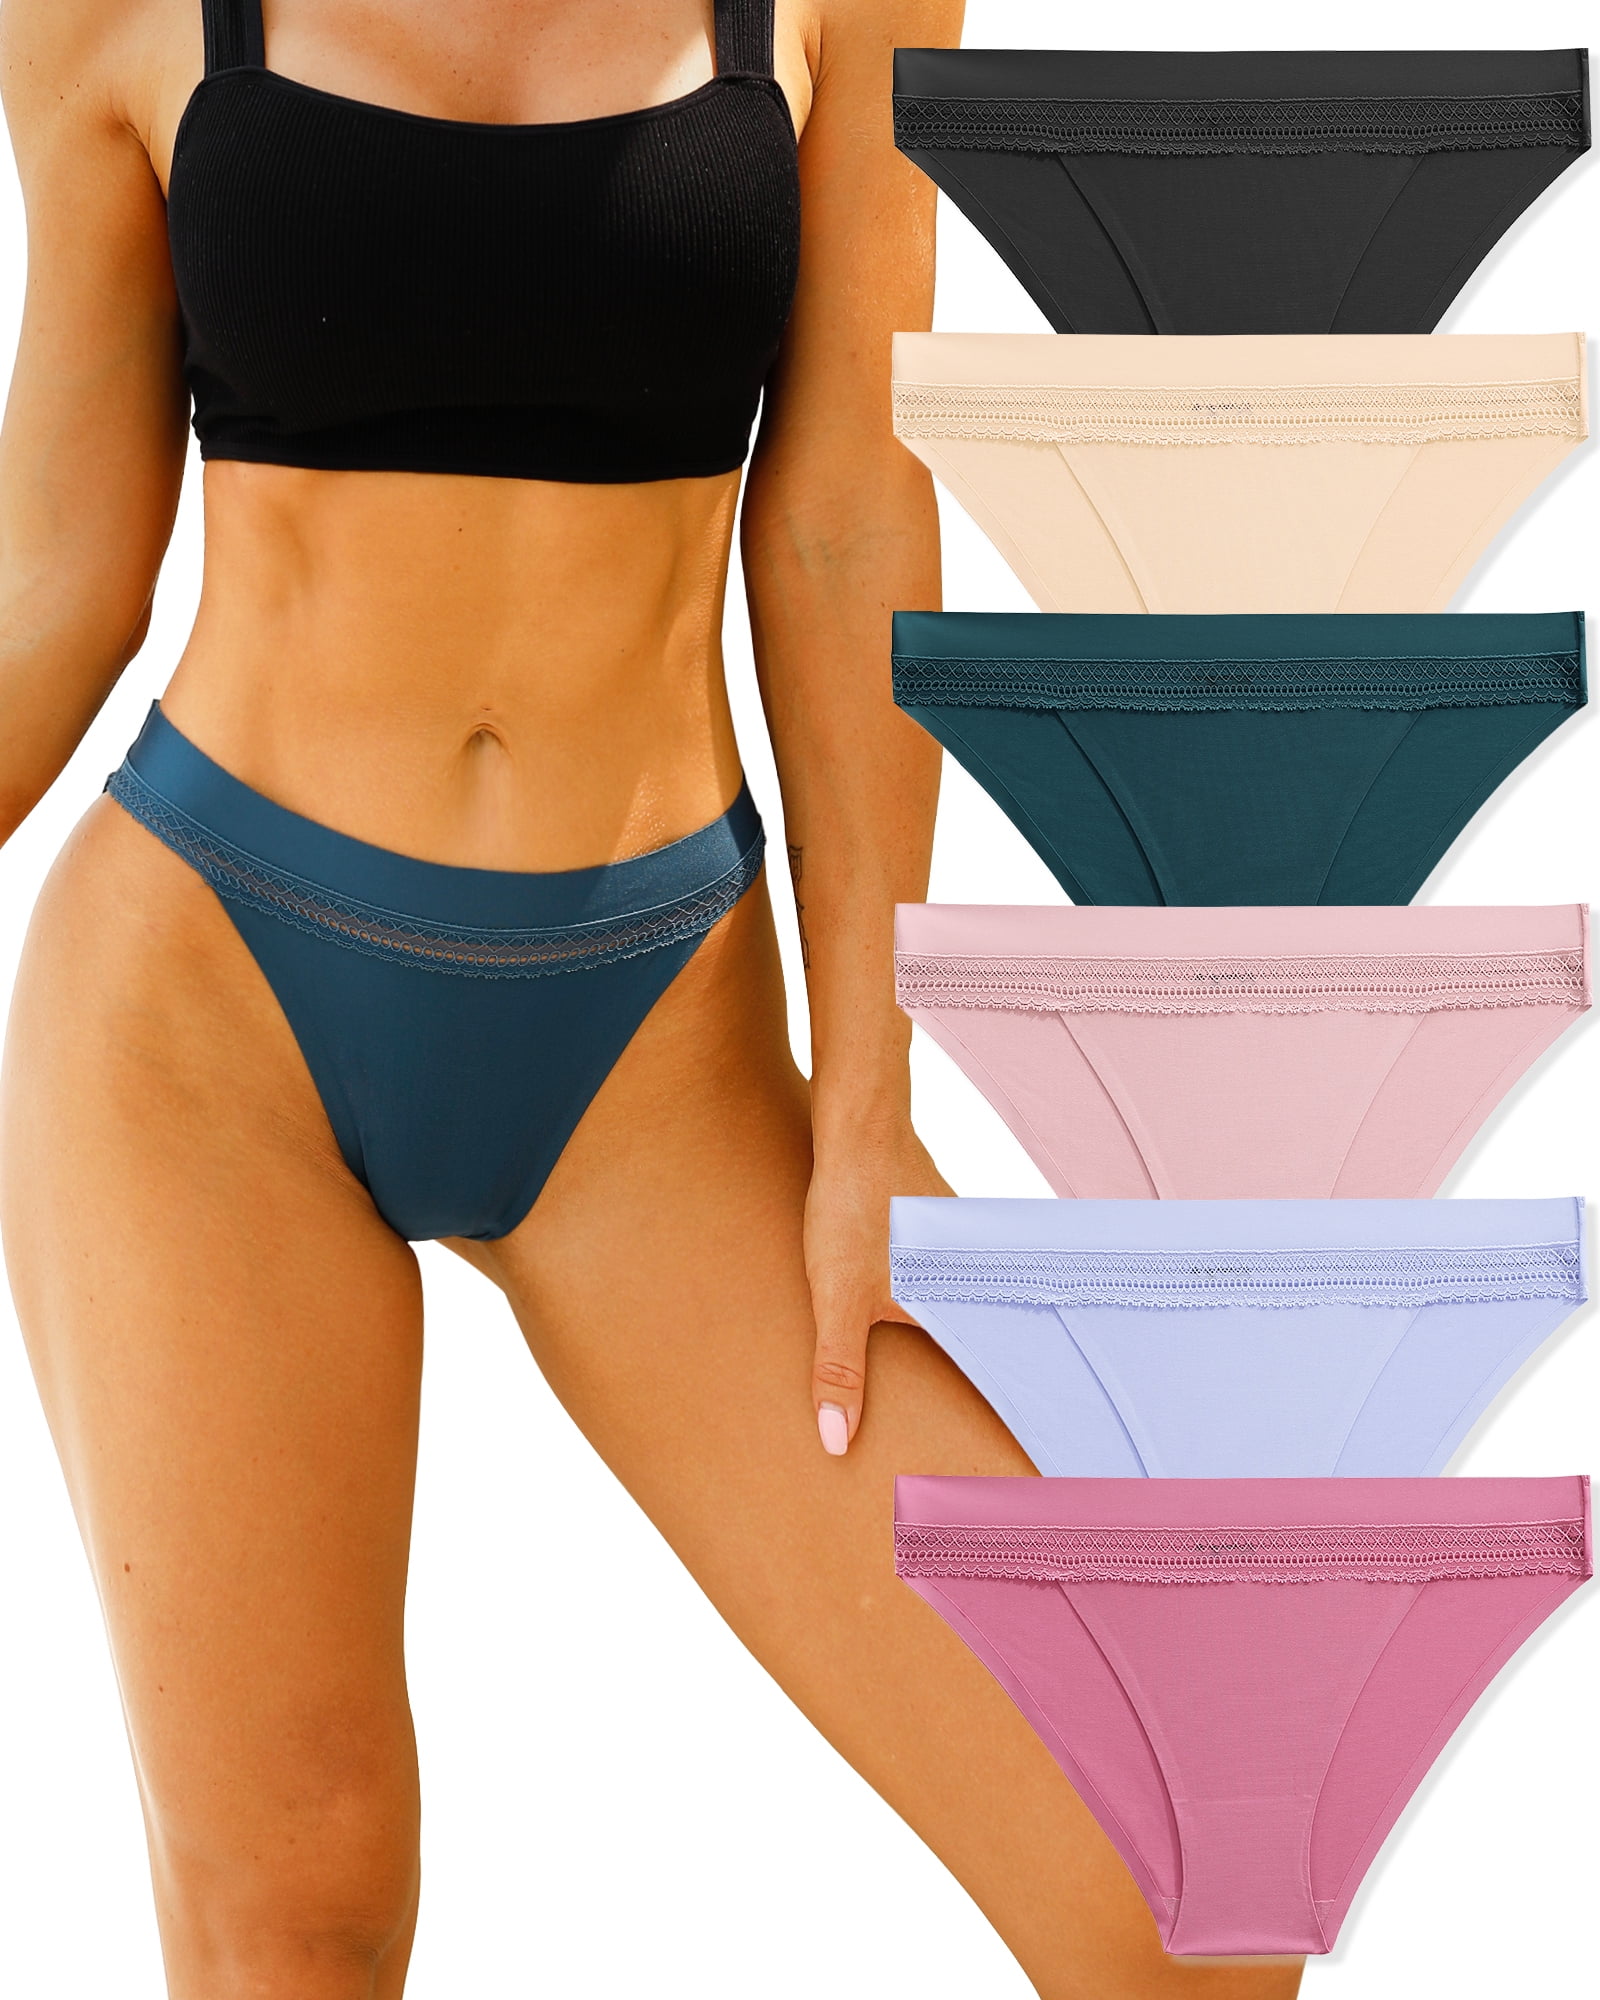 Buy FINETOO Women Underwear Cotton High Cut String Bikini Panties